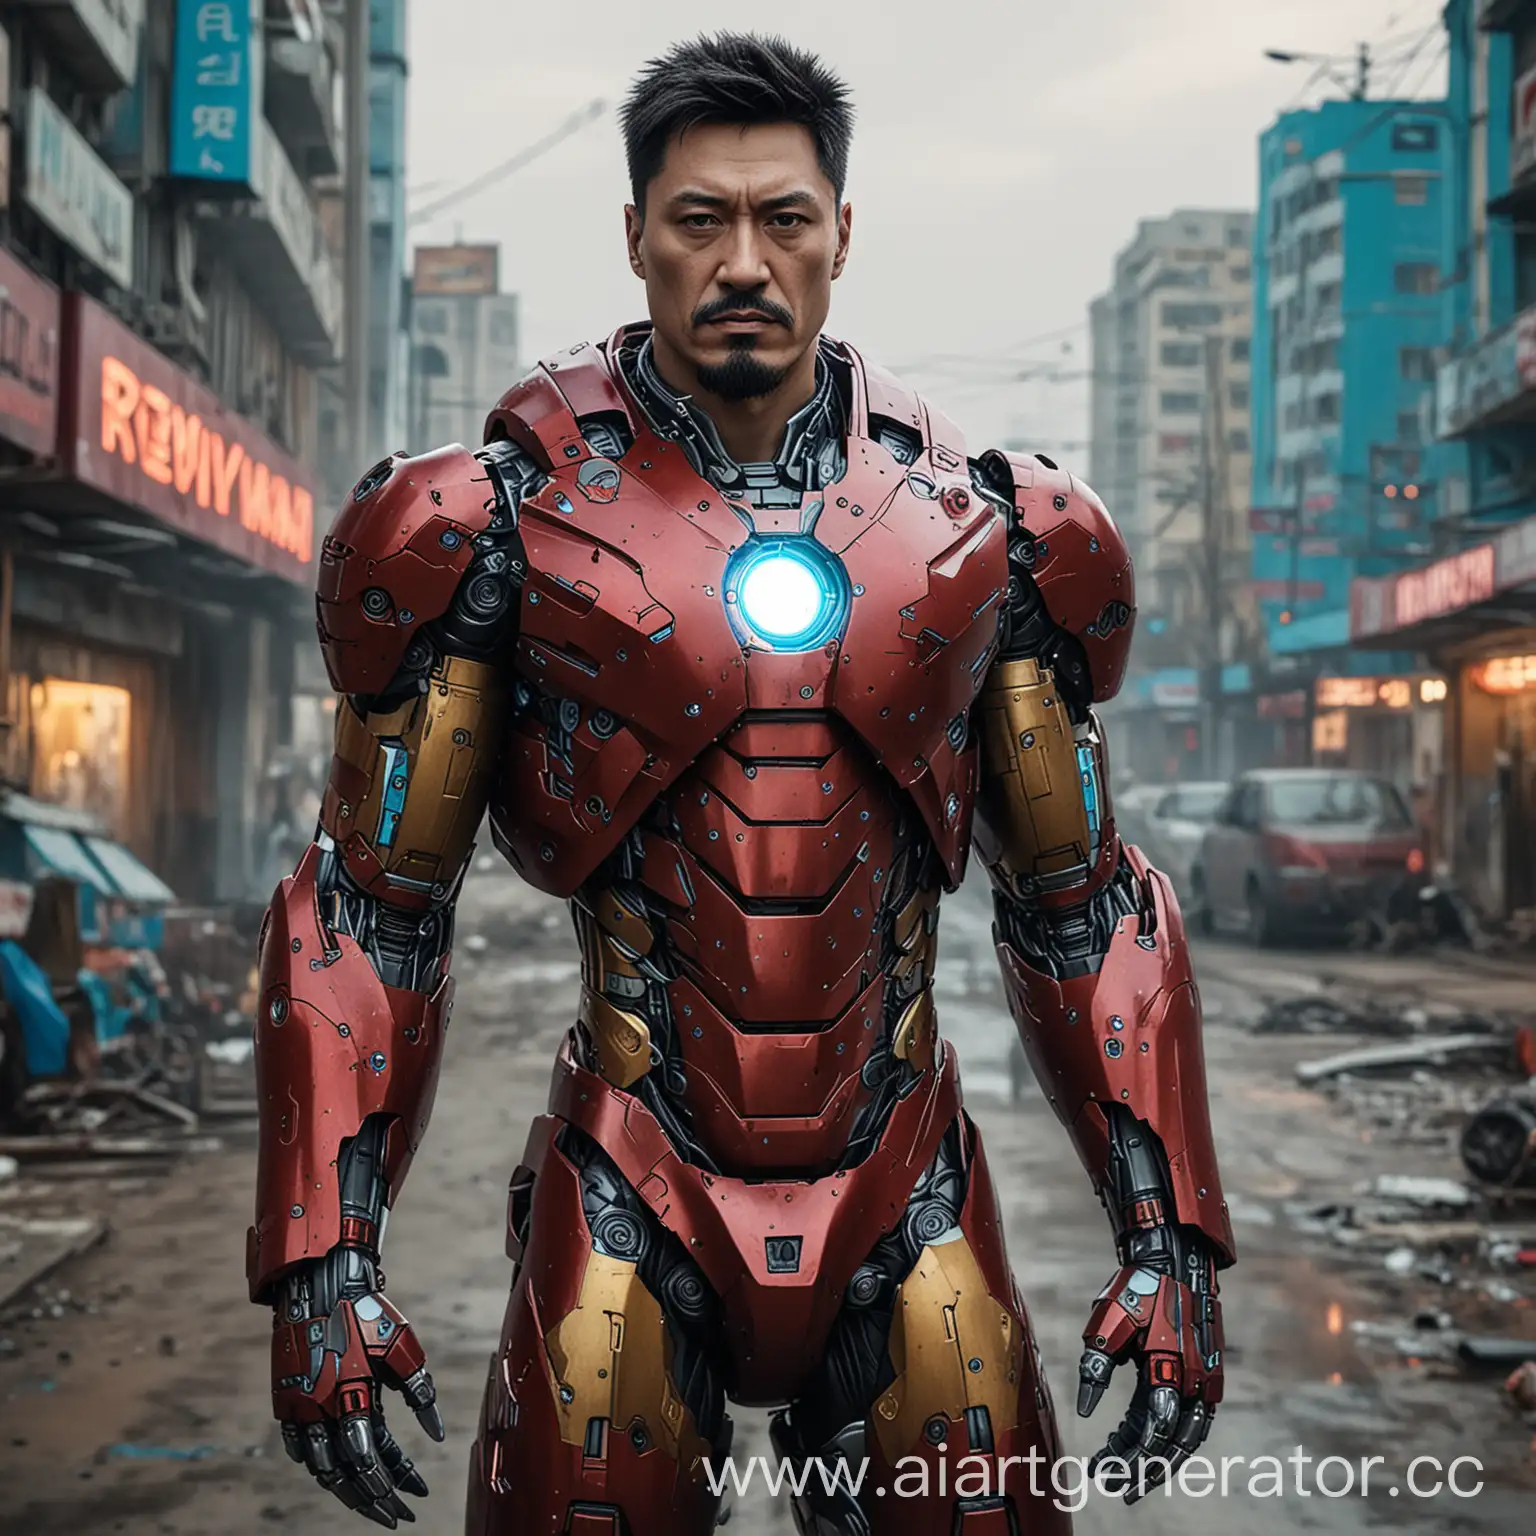 Tokaev-as-Cyberpunk-Iron-Man-in-Kazakhstan